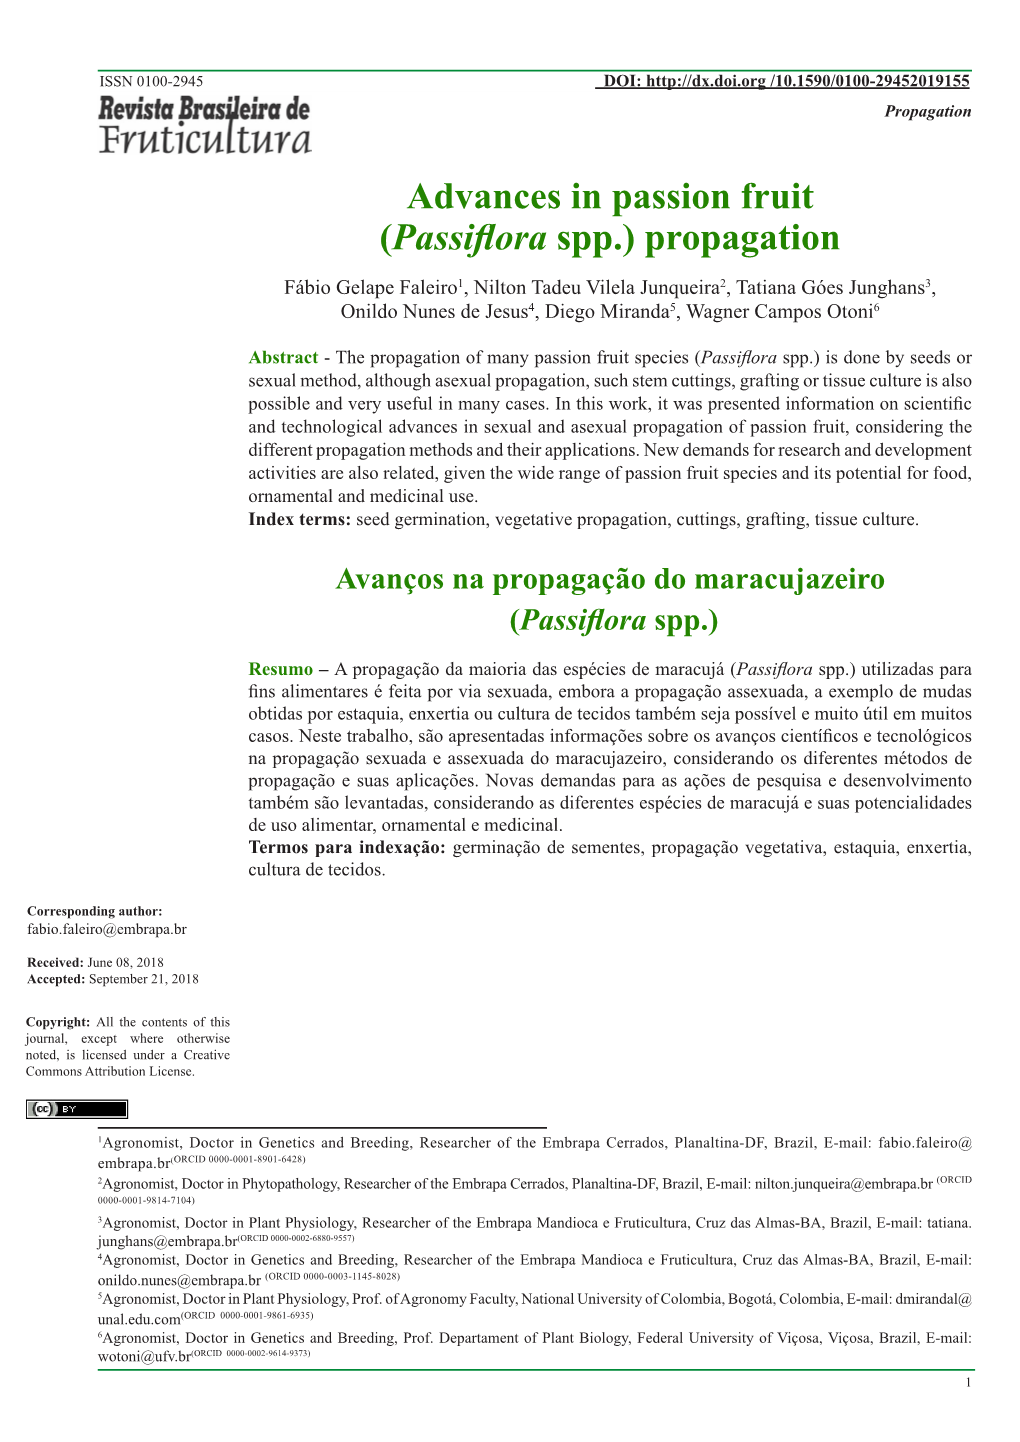 Advances in Passion Fruit (Passiflora Spp.) Propagation